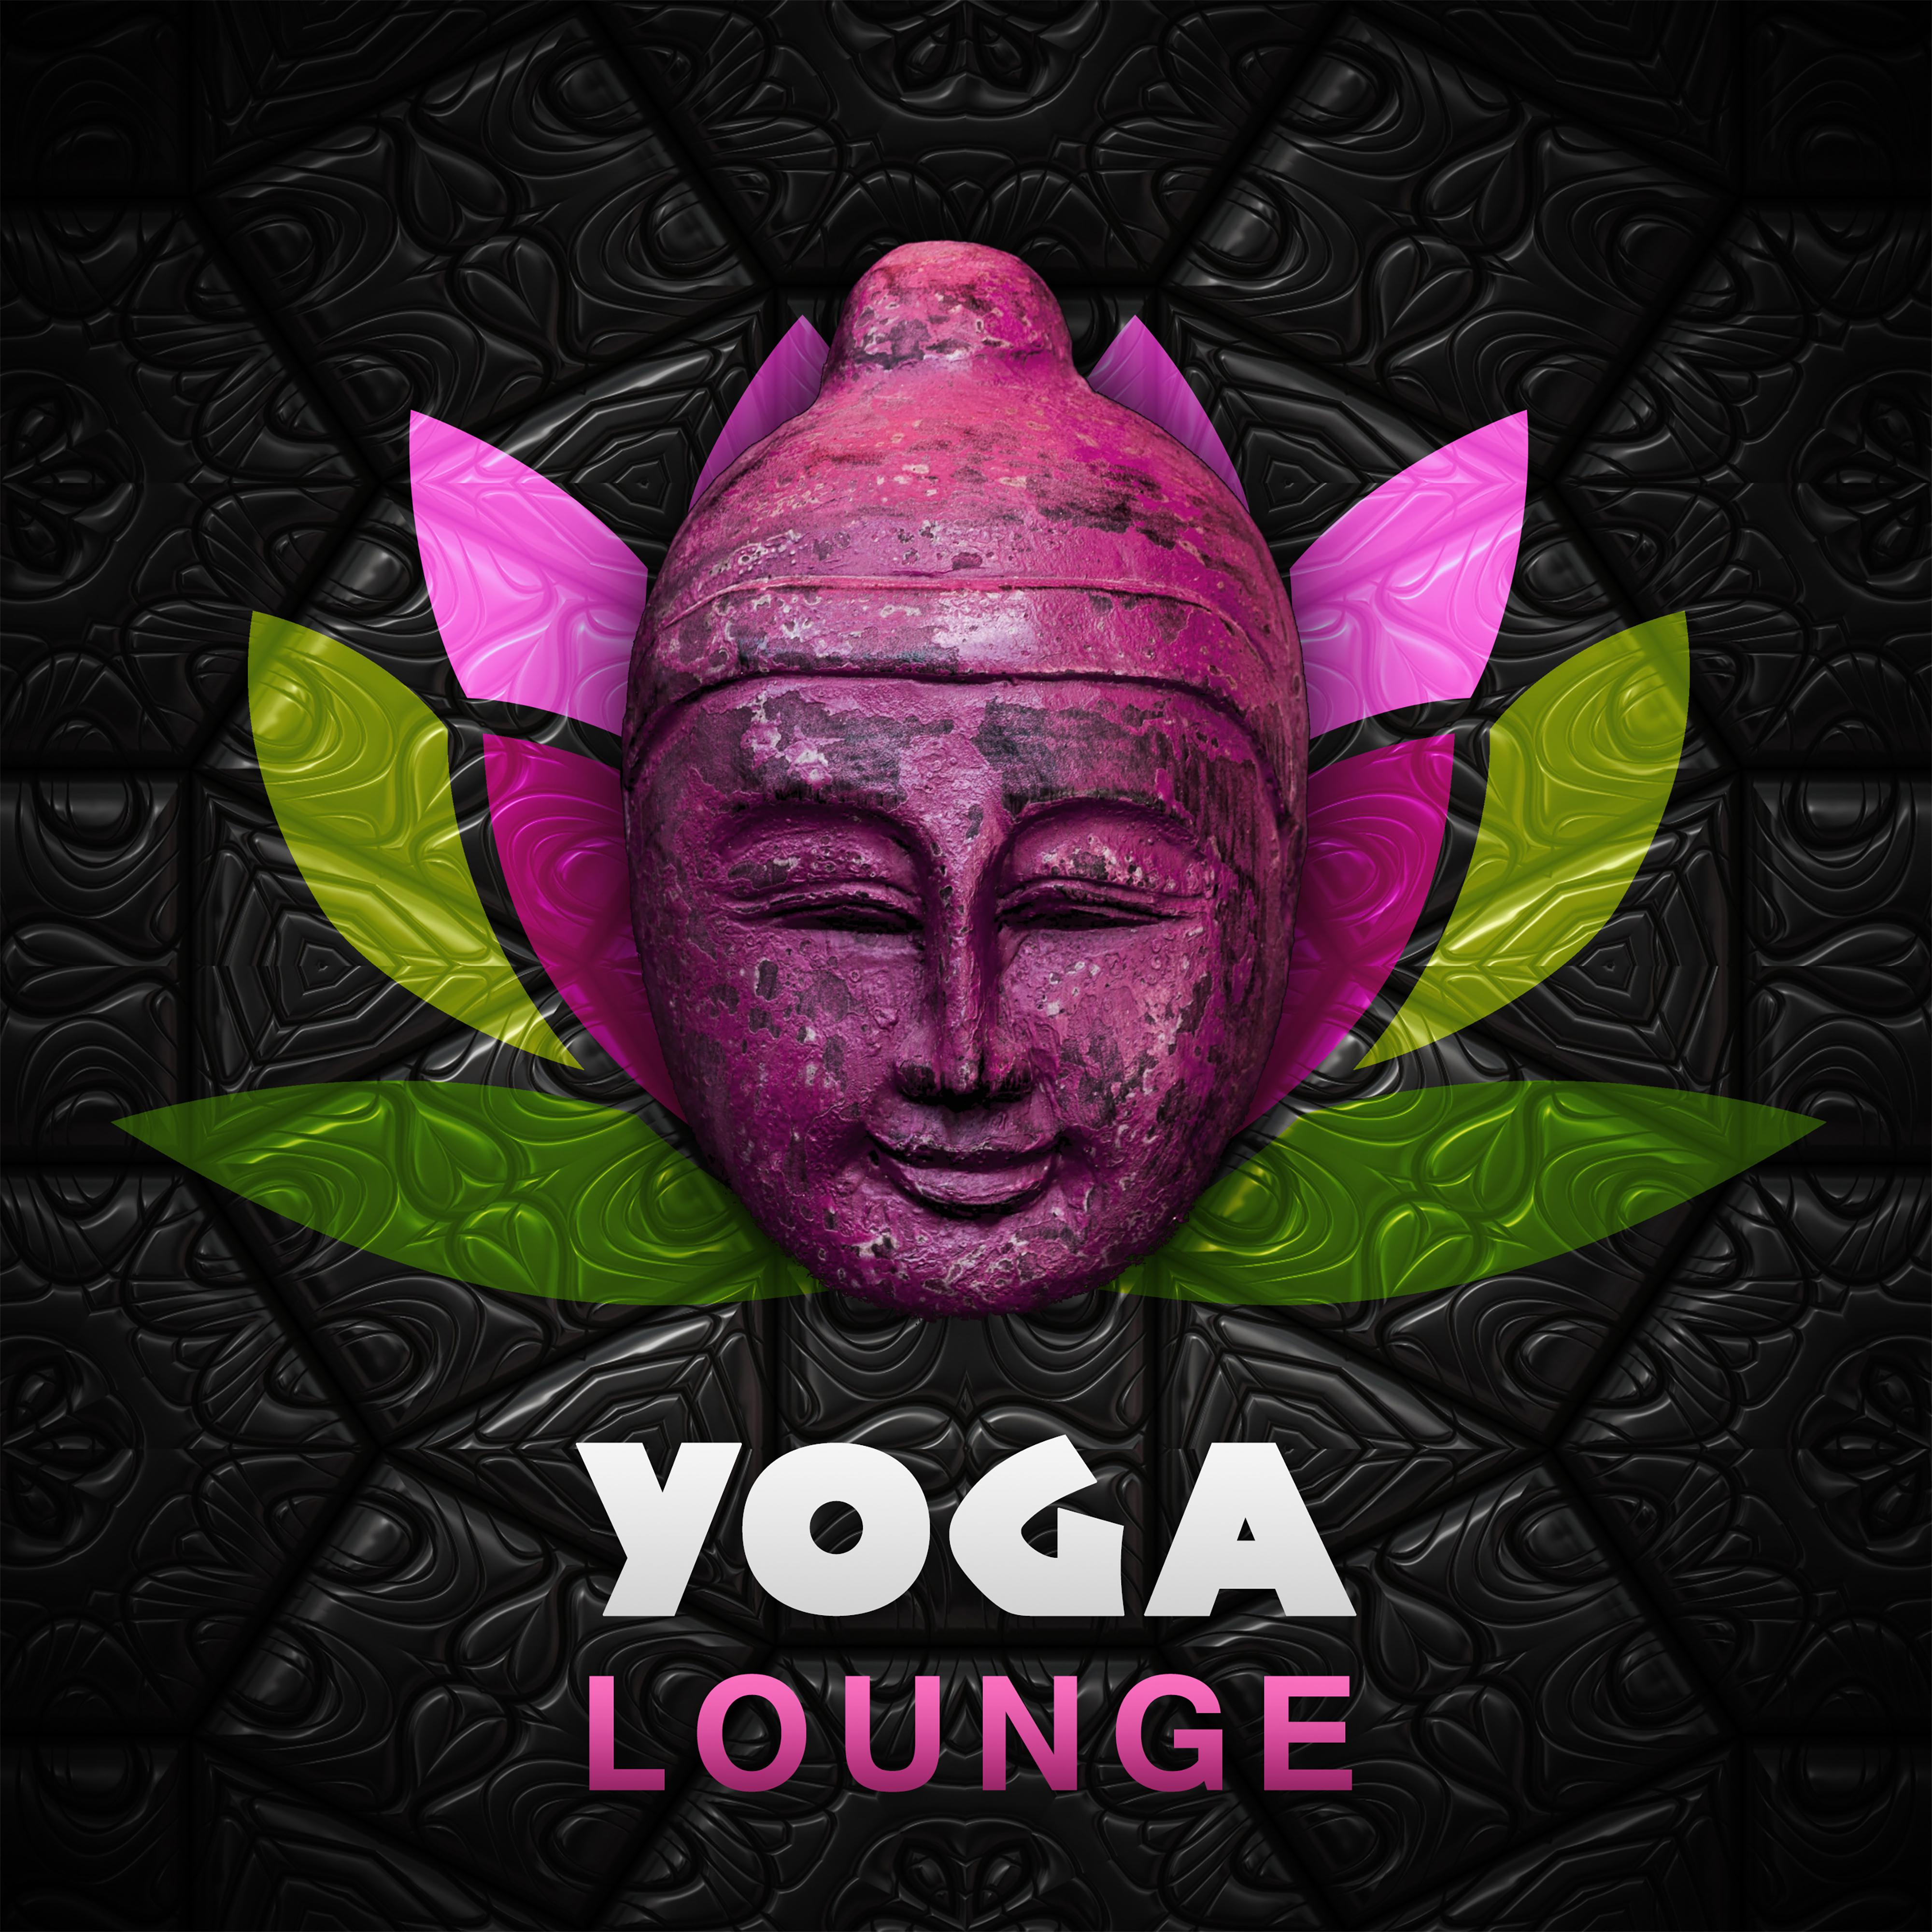 Yoga Lounge – New Age, Music for Meditation, Tibetan Spirit, Buddha Lounge, Yoga Music